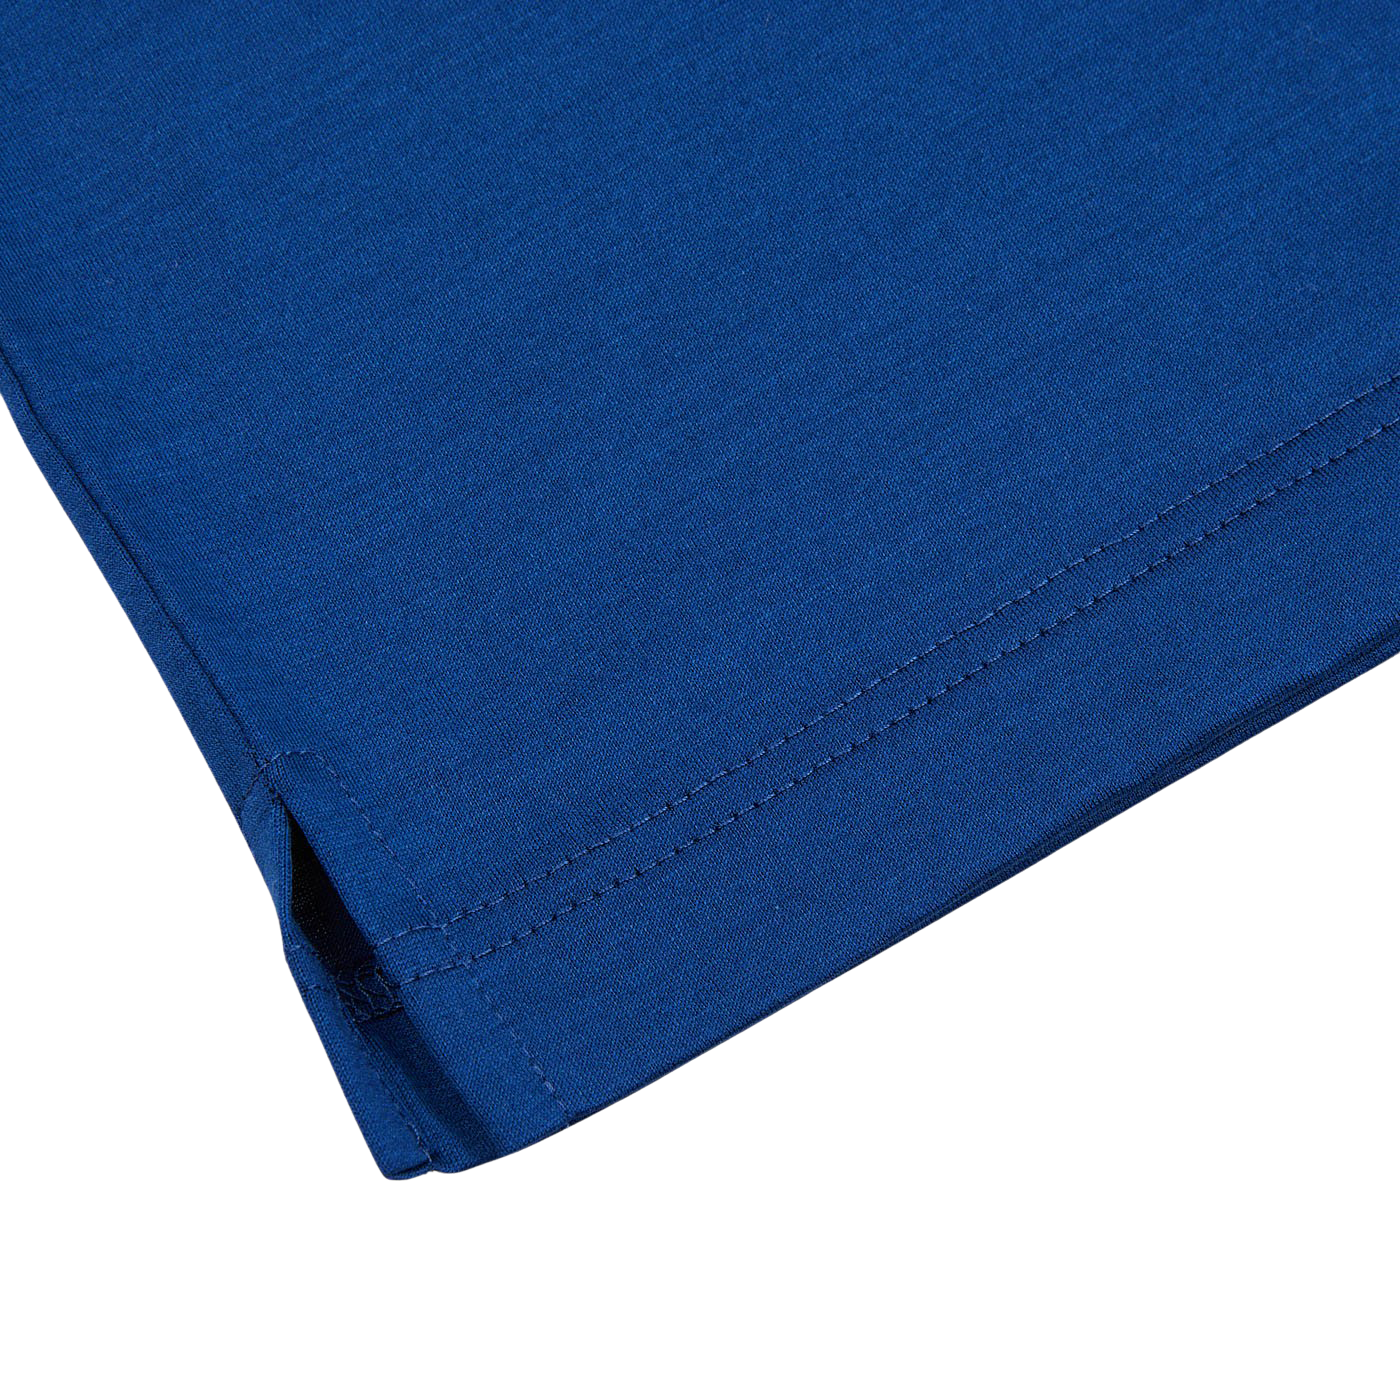 A close up of a Gran Sasso navy blue cotton Filo Scozia polo shirt.